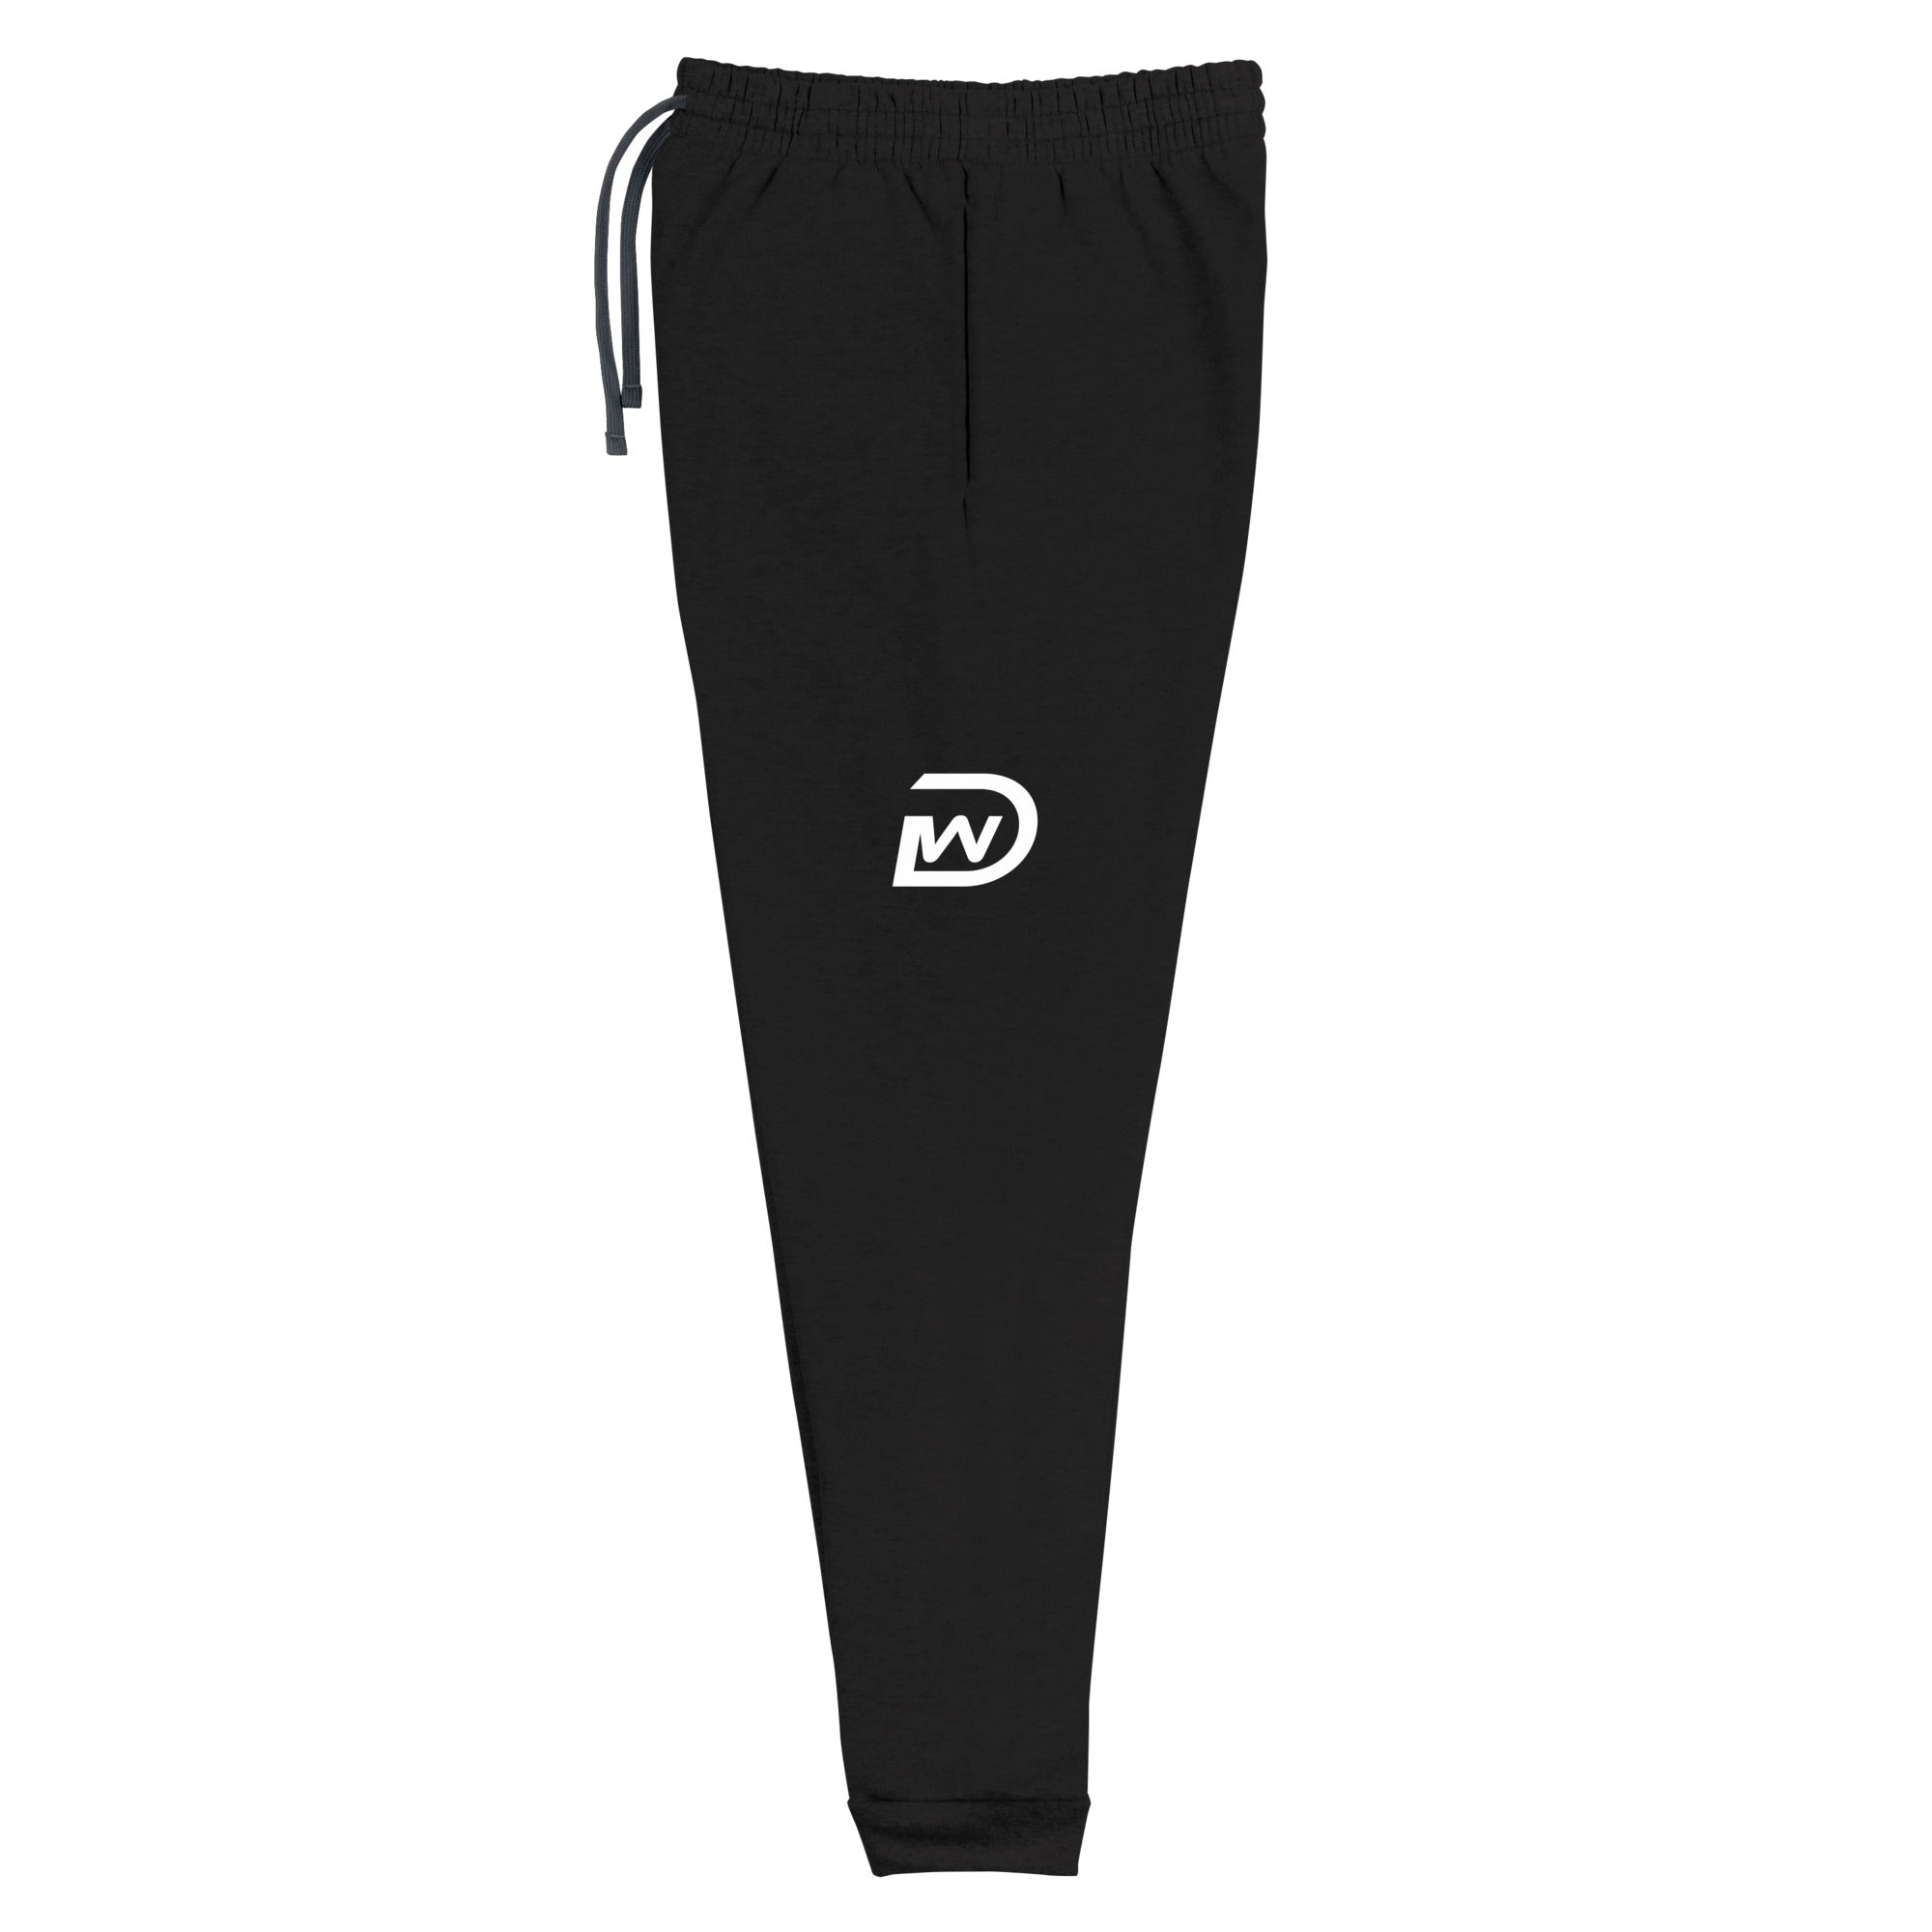 DeAngelo Williams "Logo" Jogger Sweatpants